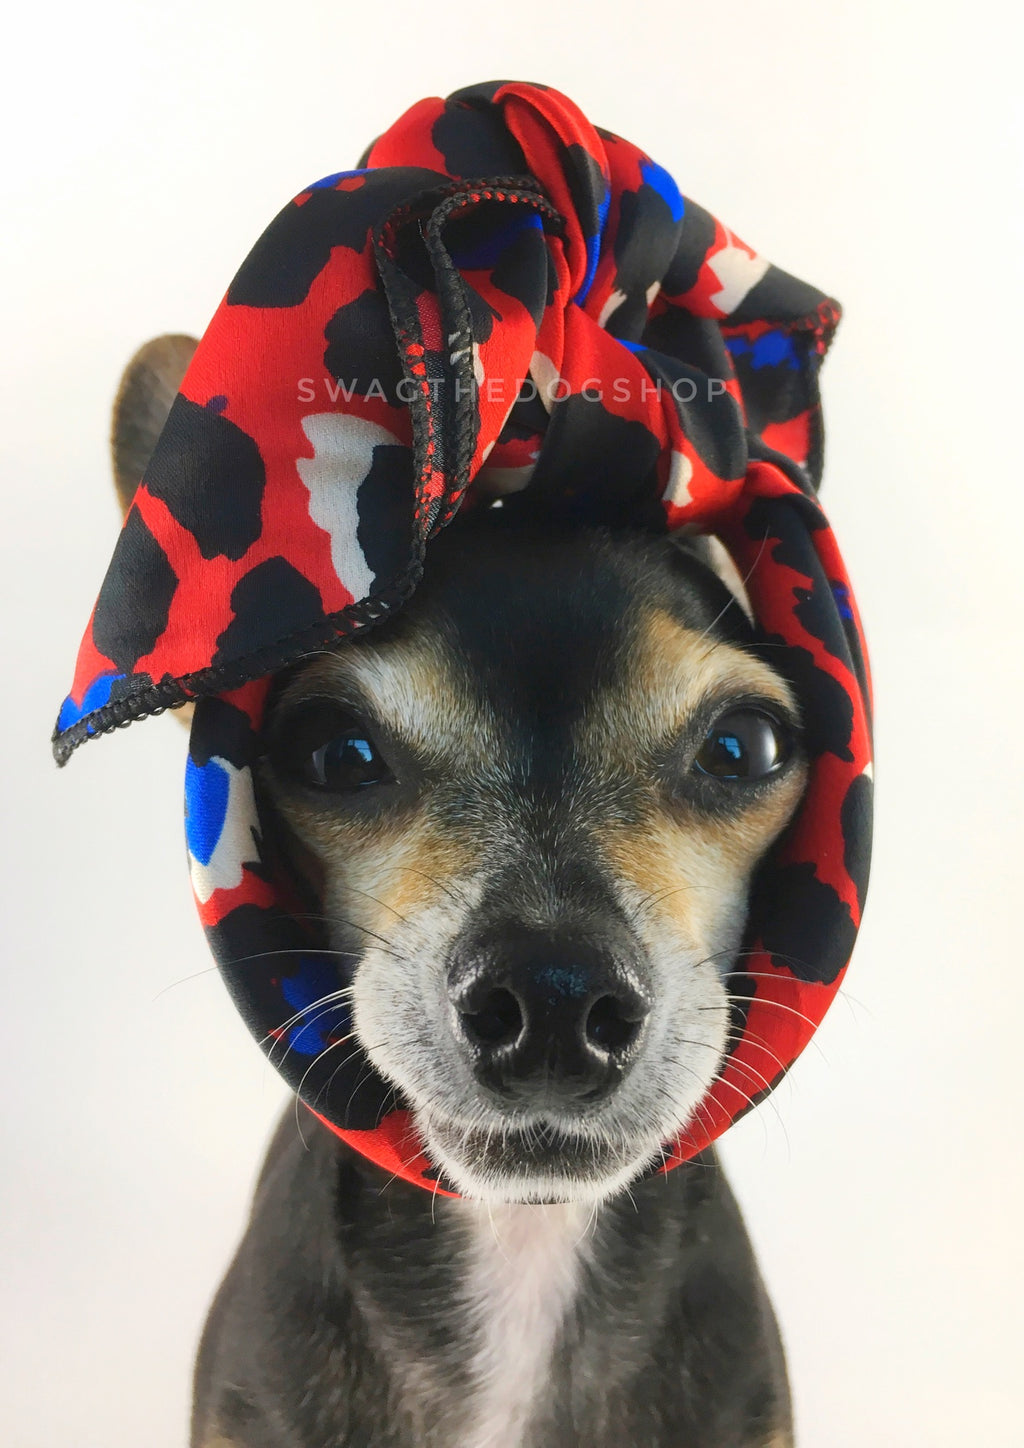 Fierce Vibrant Red with Blue Swagdana Scarf - Bust of Cute Chihuahua Wearing Swagdana Scarf as Headband. Dog Bandana. Dog Scarf